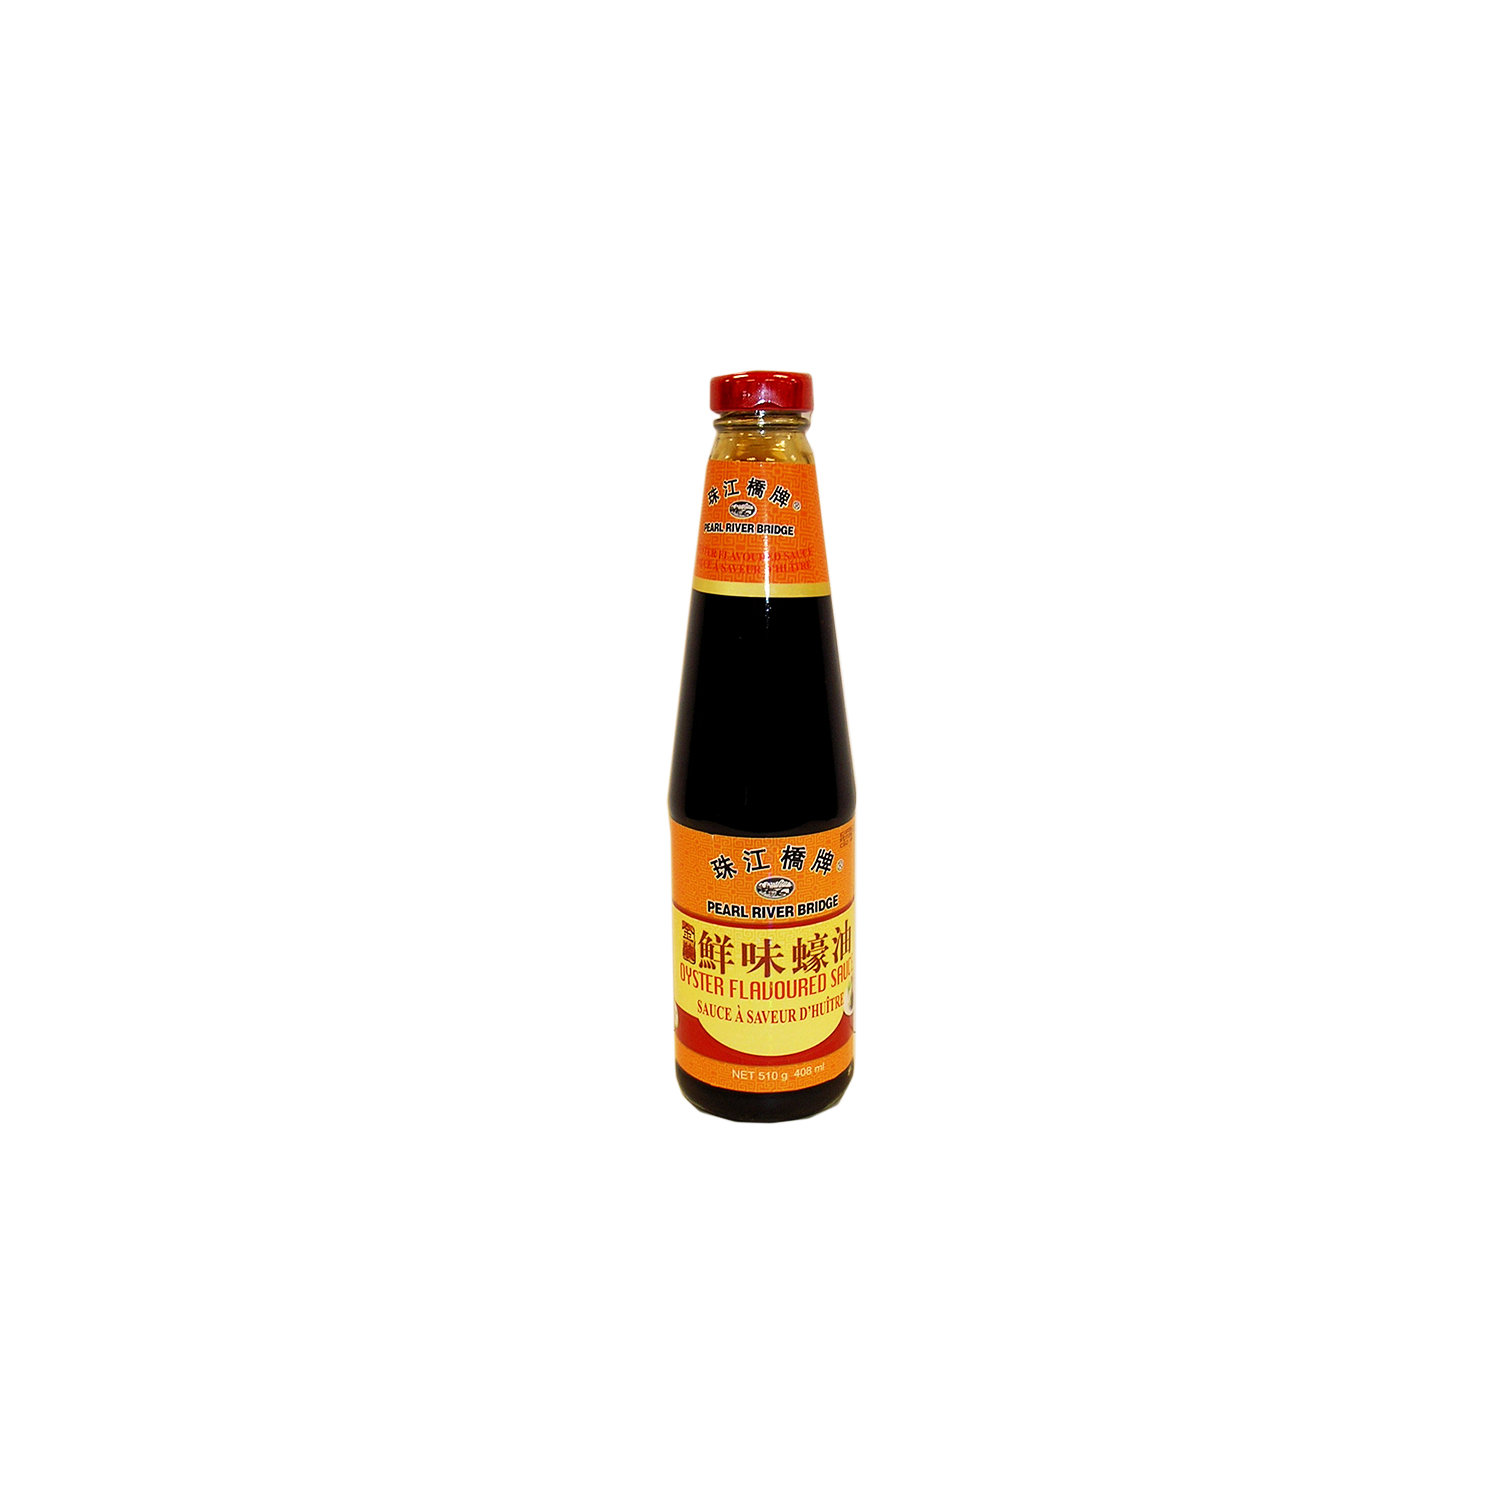 Pearl River Bridge - Oyster Flavored Sauce, 510 Gram